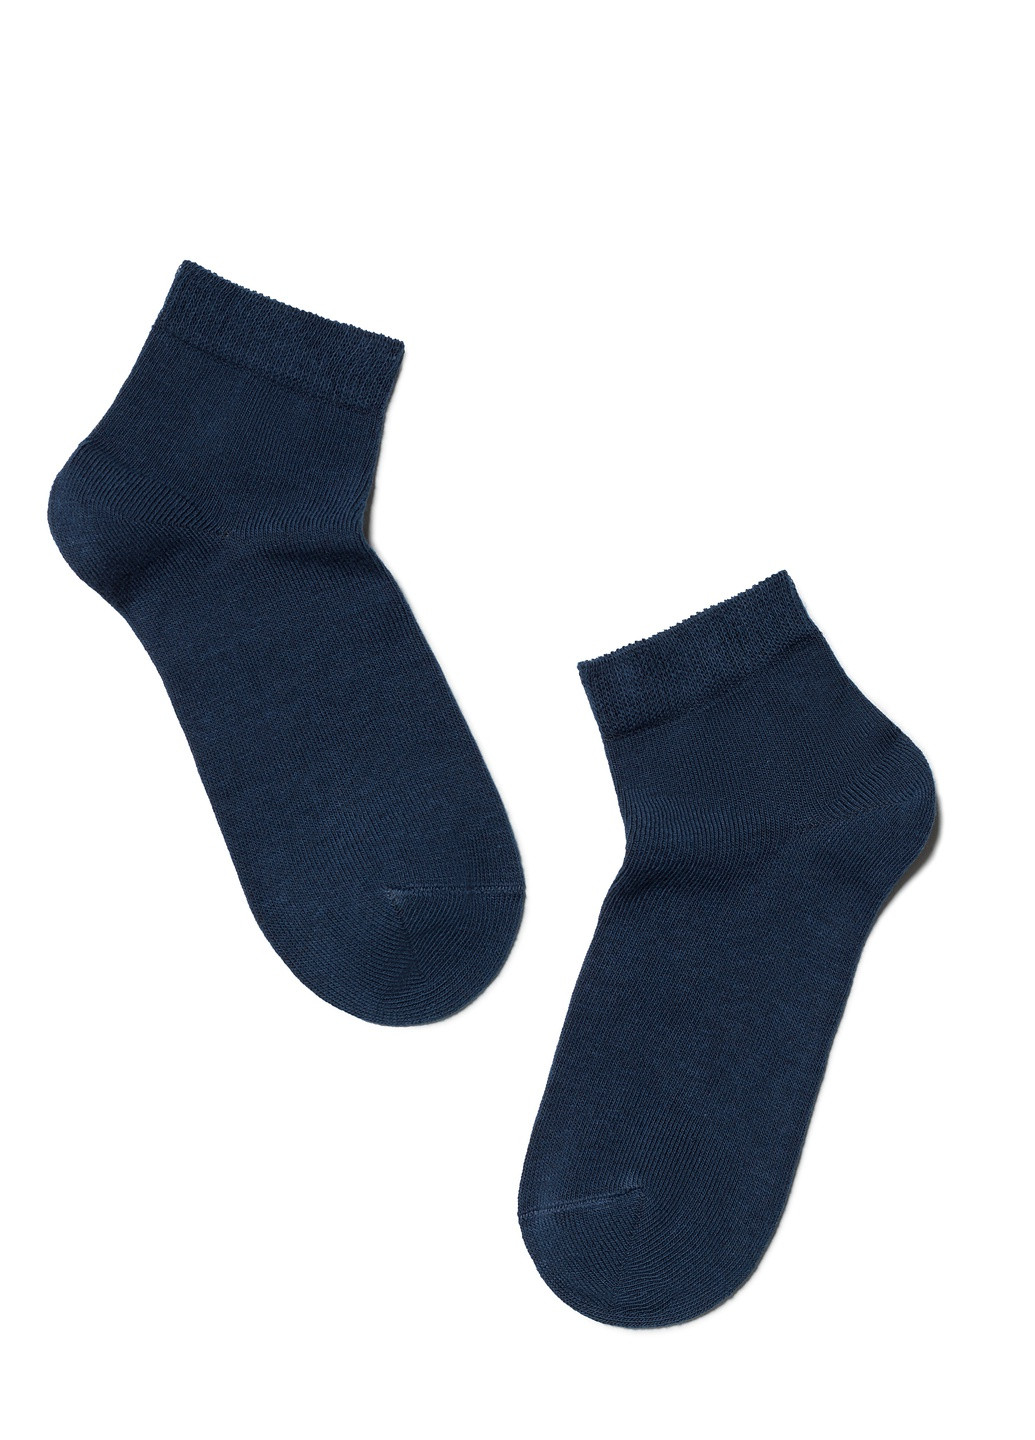 Шкарпетки дит. Esli e (короткі) 19с-143спе (221743400)